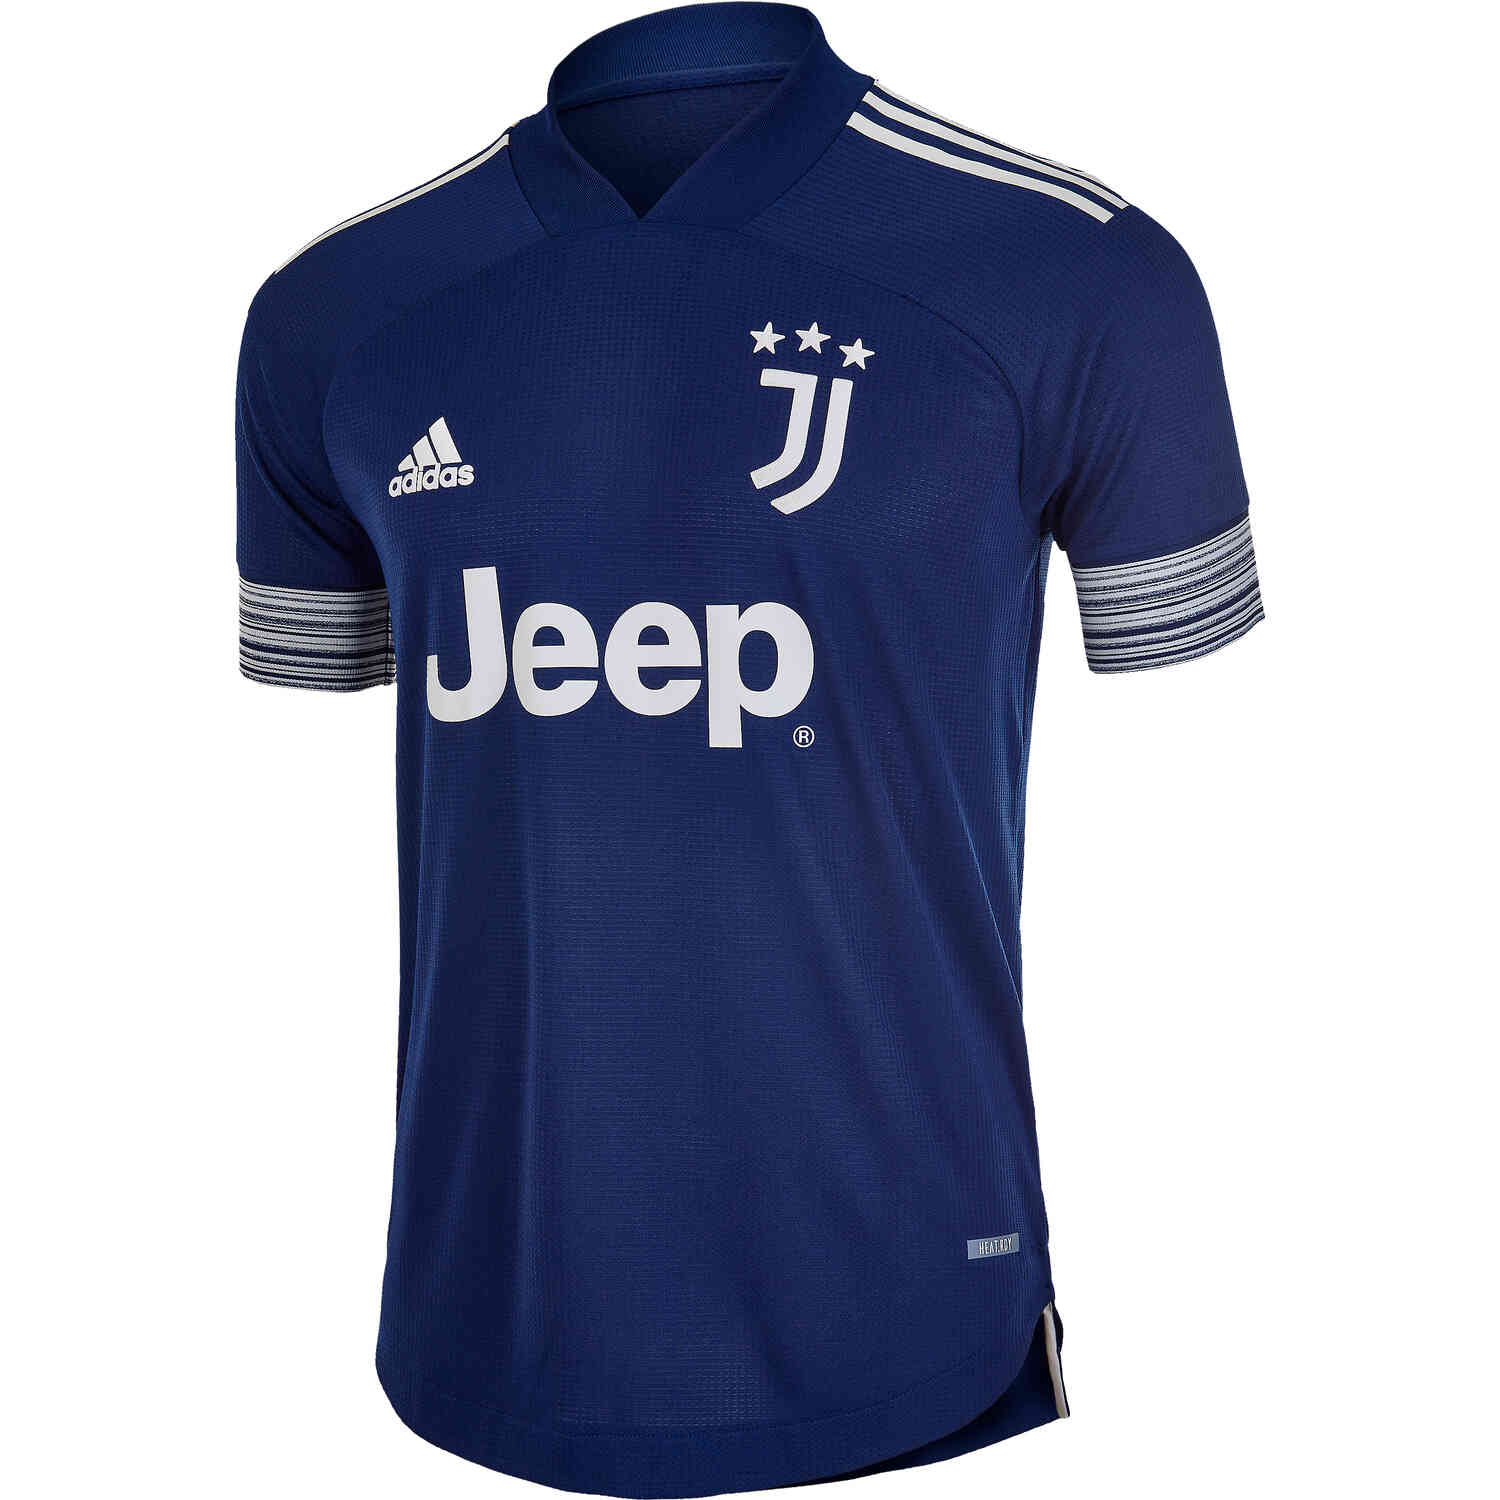 2020/21 adidas Juventus Away Authentic 